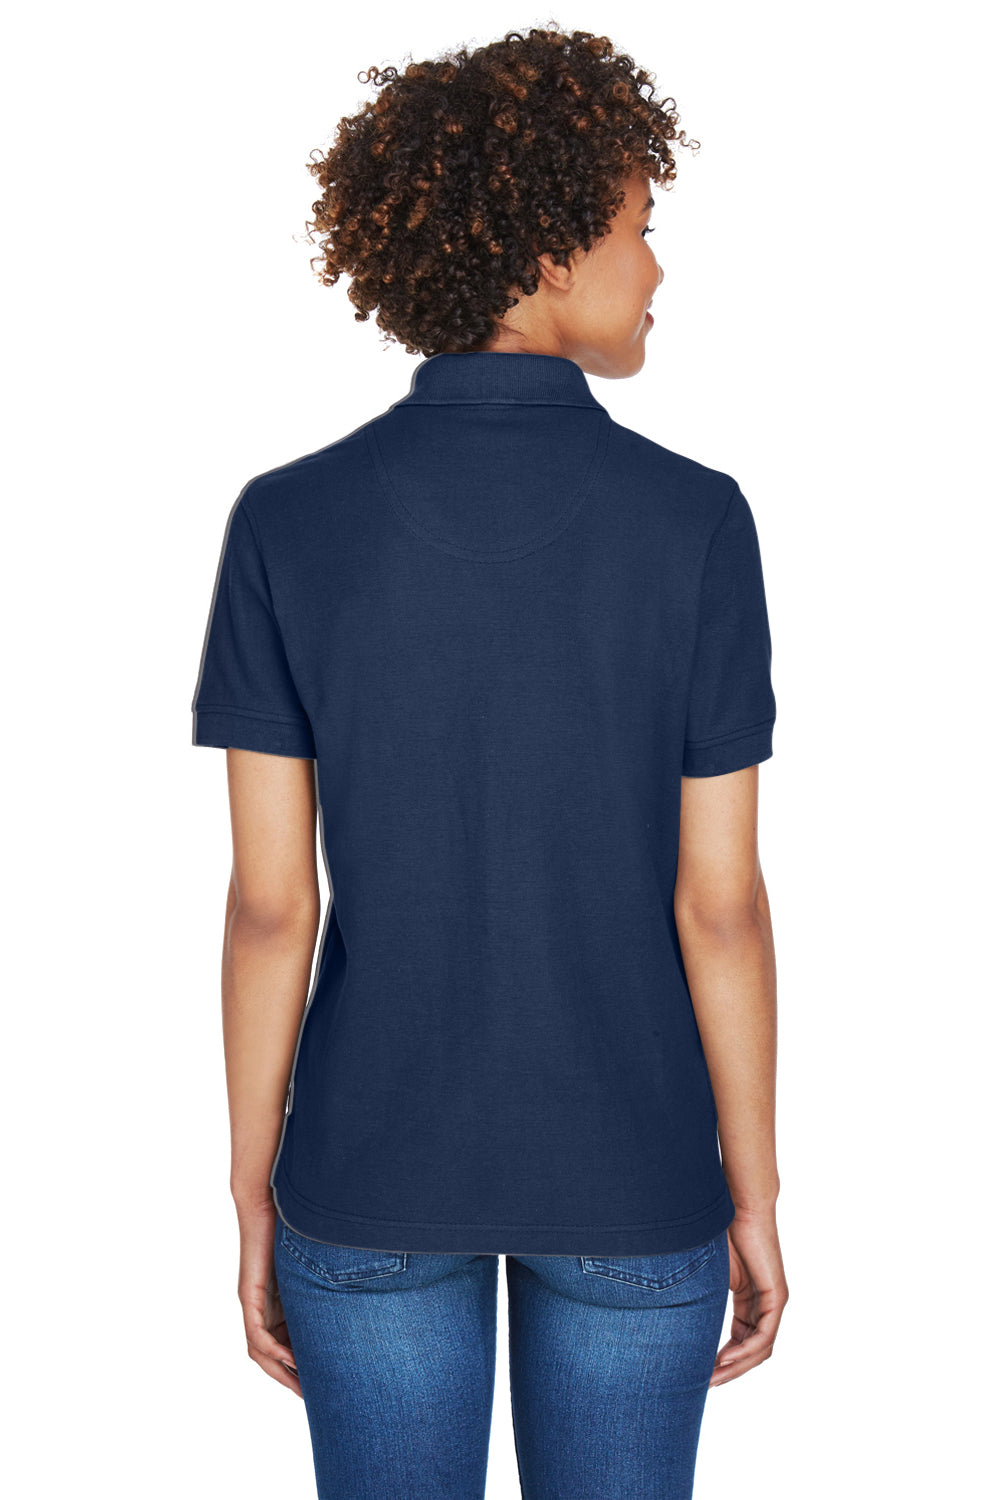 UltraClub 8541 Womens Whisper Short Sleeve Polo Shirt Navy Blue Back